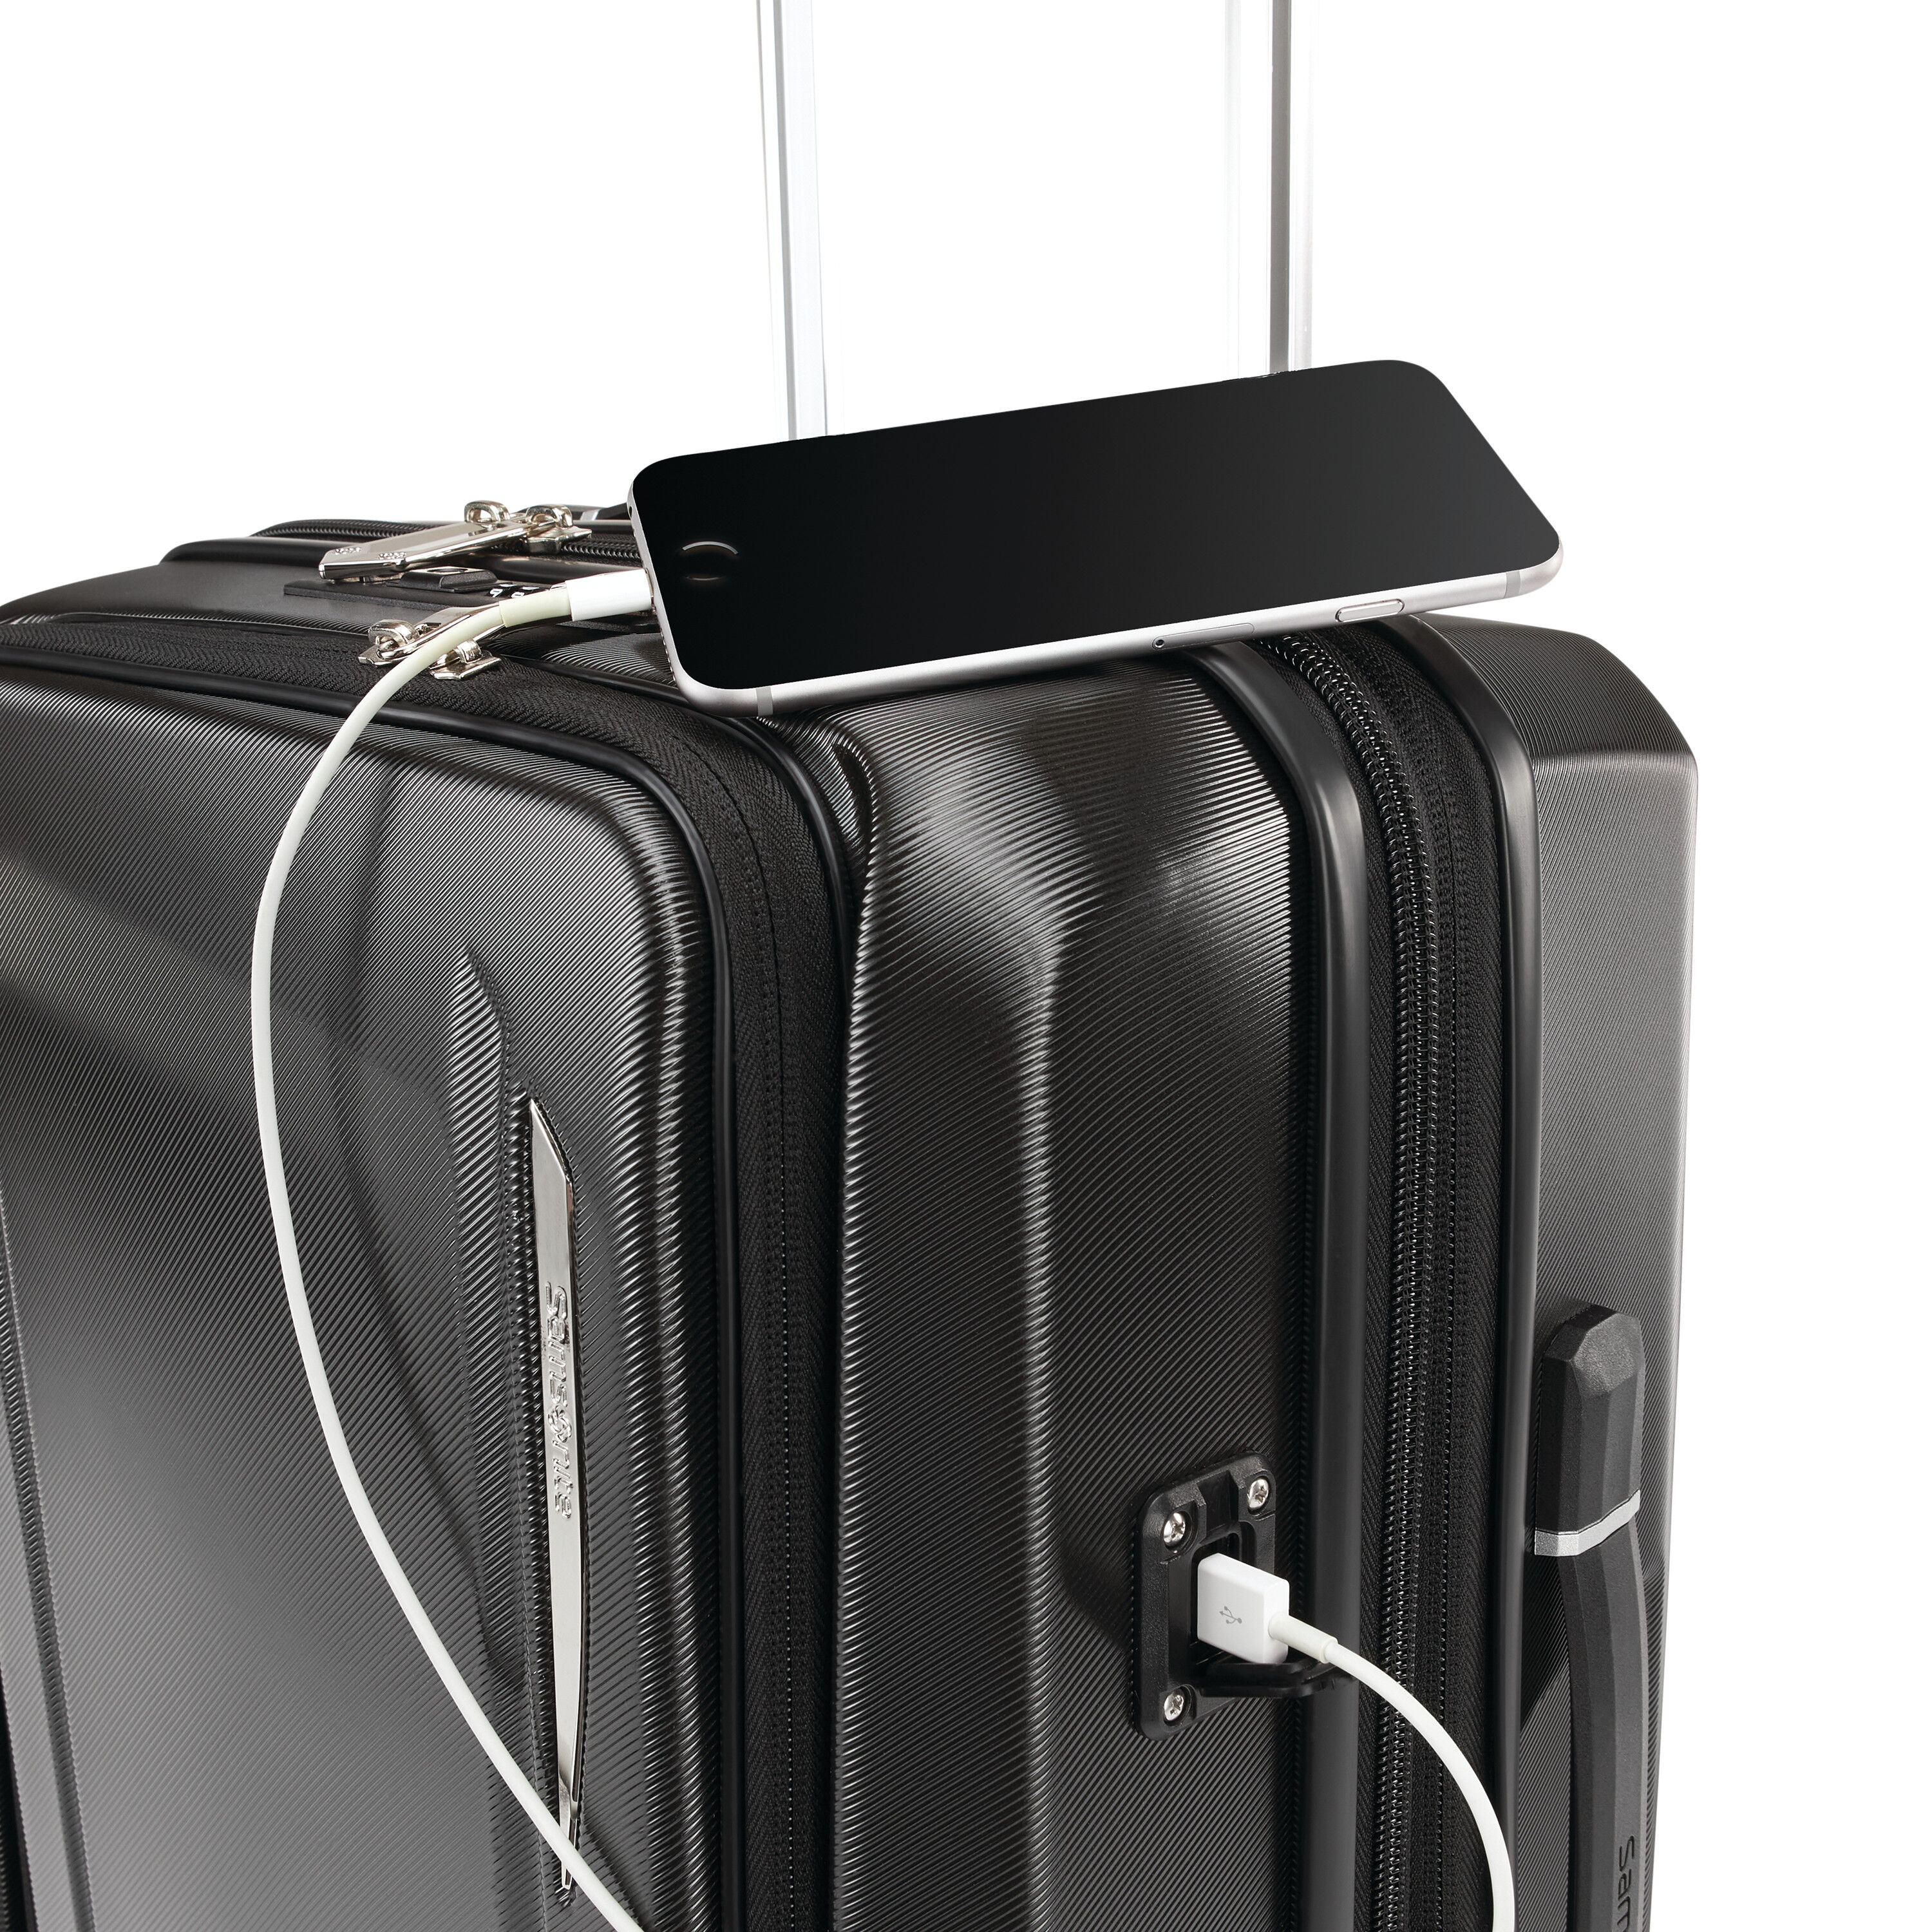 How to Charge Samsonite Luggage  